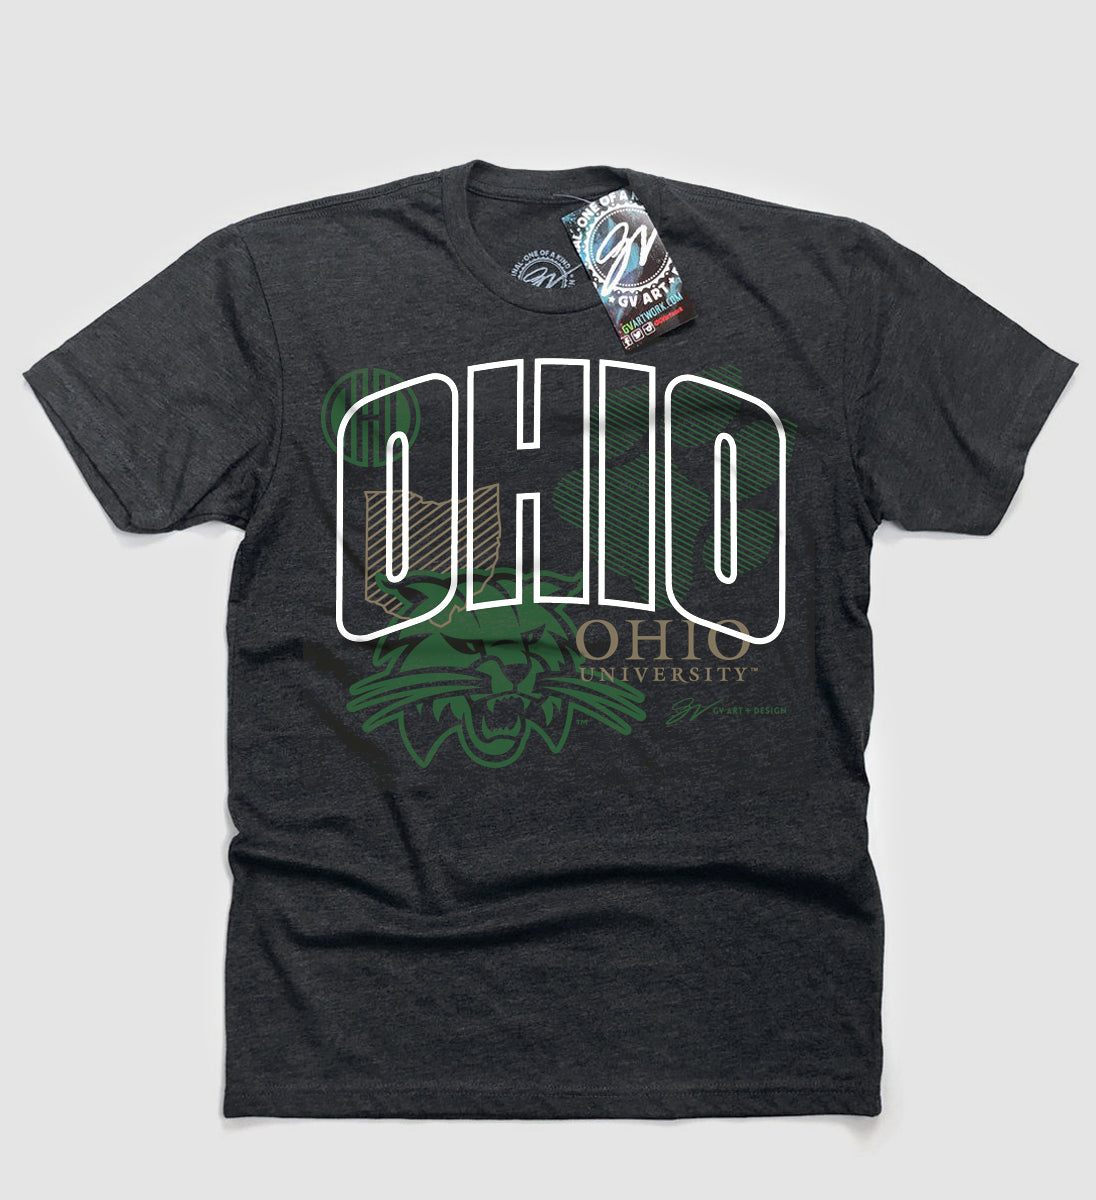 Ohio University Tradition T shirt